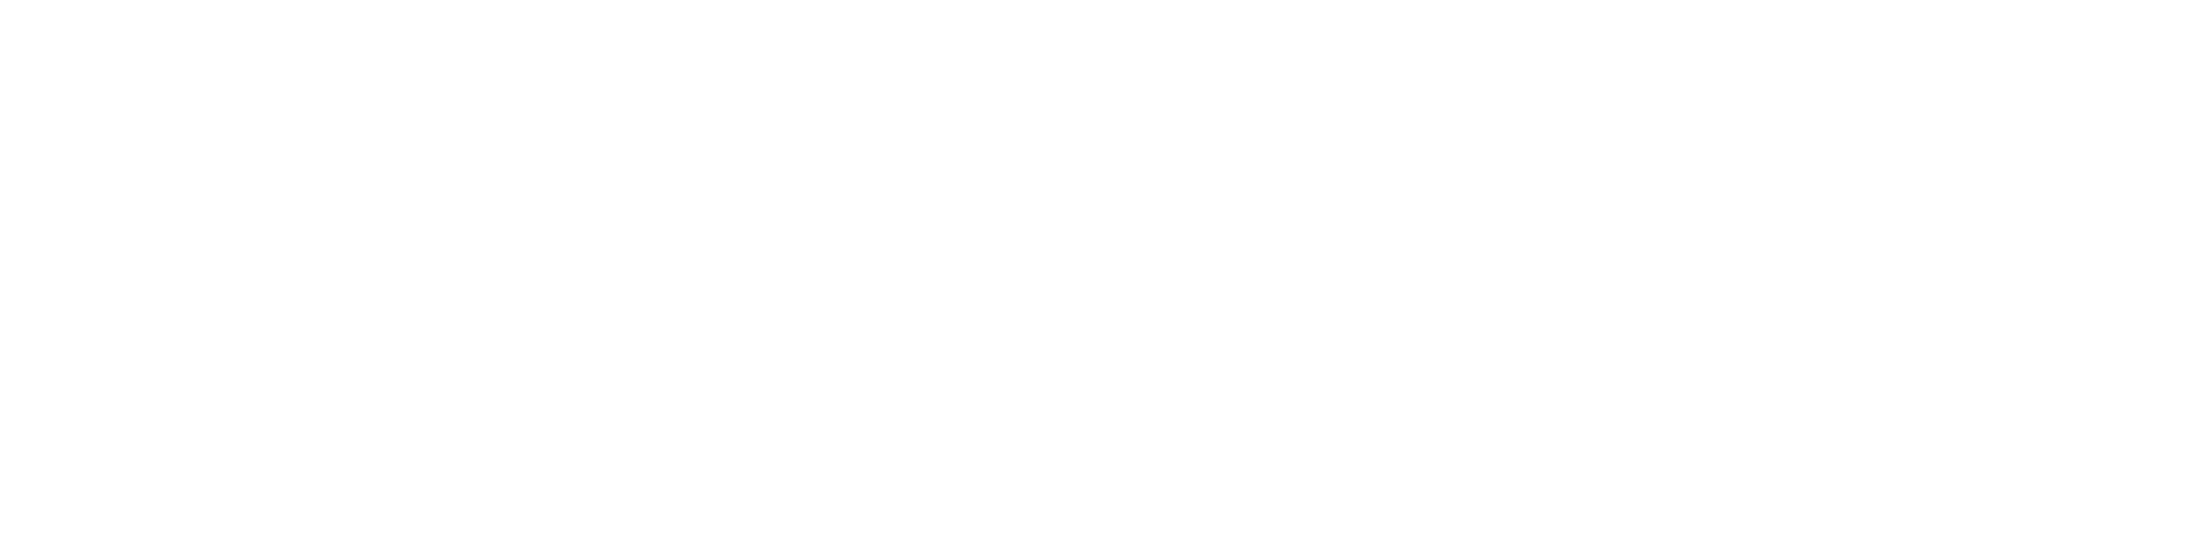 Hosler Wealth Management, LLC